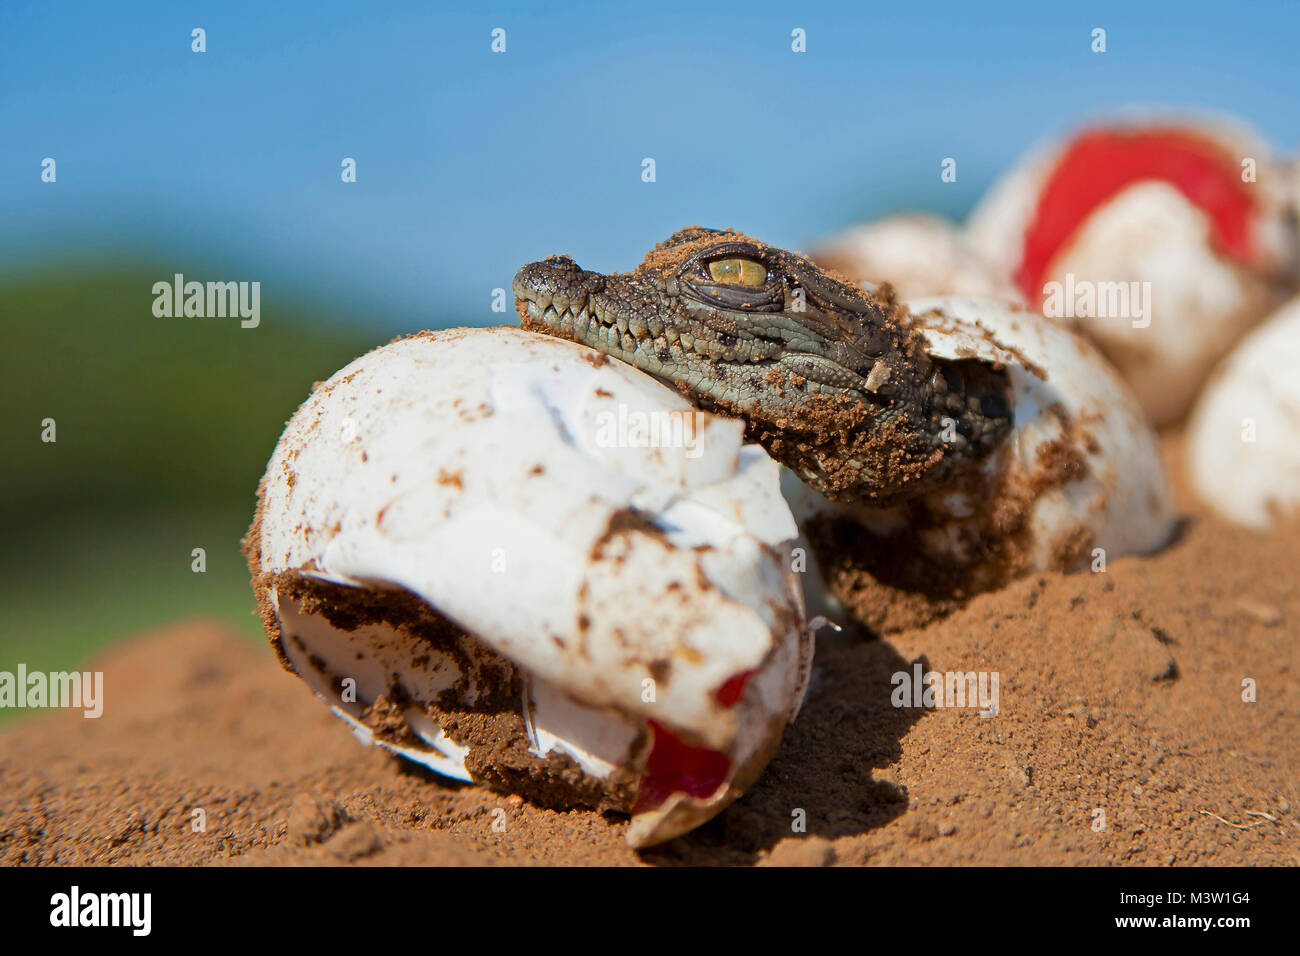 Nile Crocodile hatching. Stock Photo